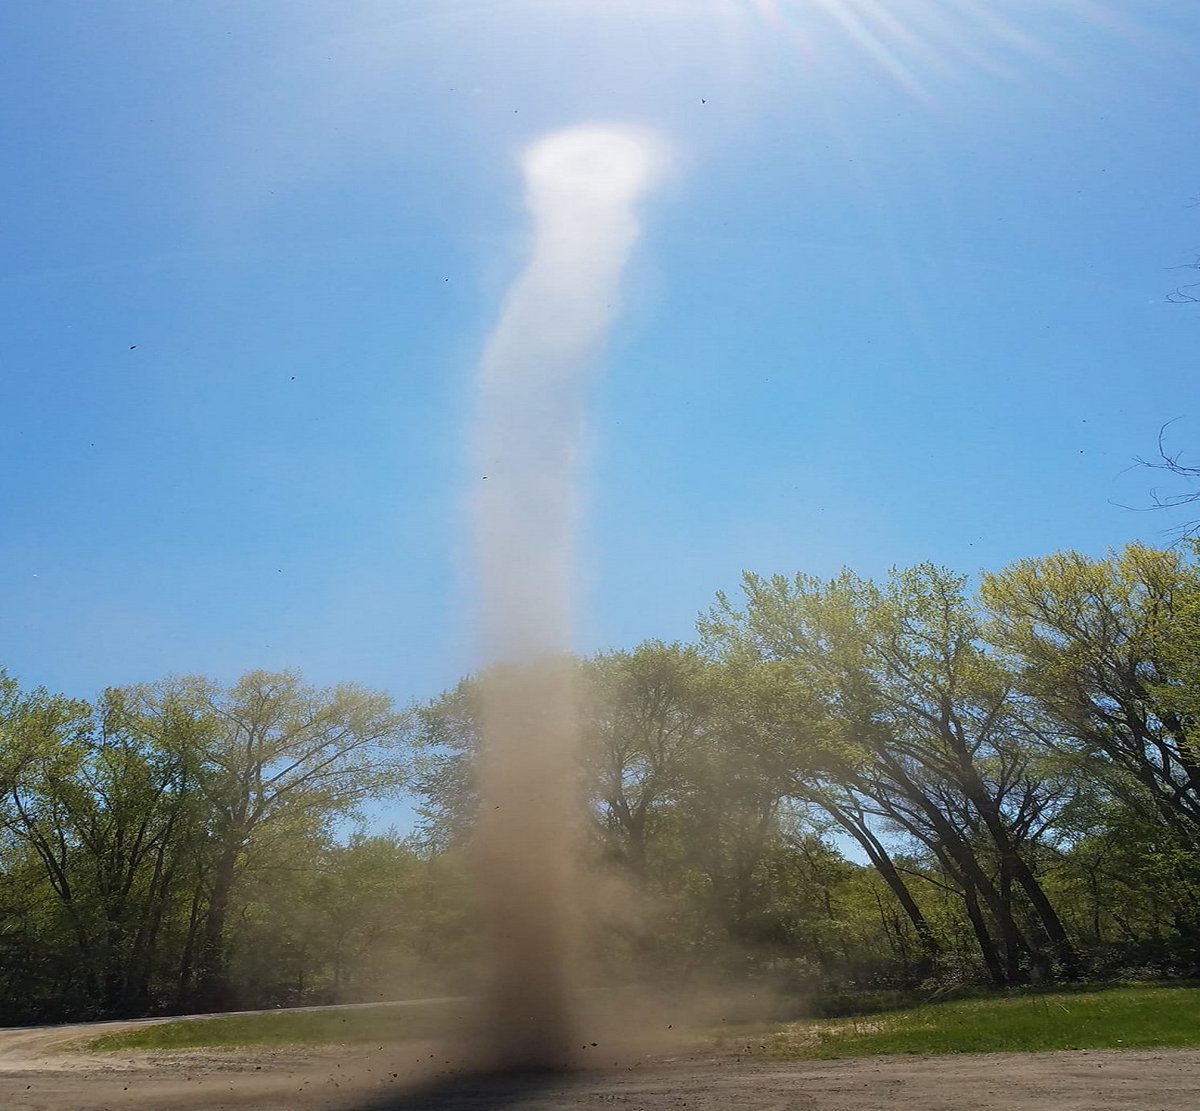 RT @mark_tarello: WOW! Dust devil seen Tuesday from St. Peter, Minnesota. Photo courtesy of Jeff Brand. #MNwx https://t.co/8IQelhhdZv